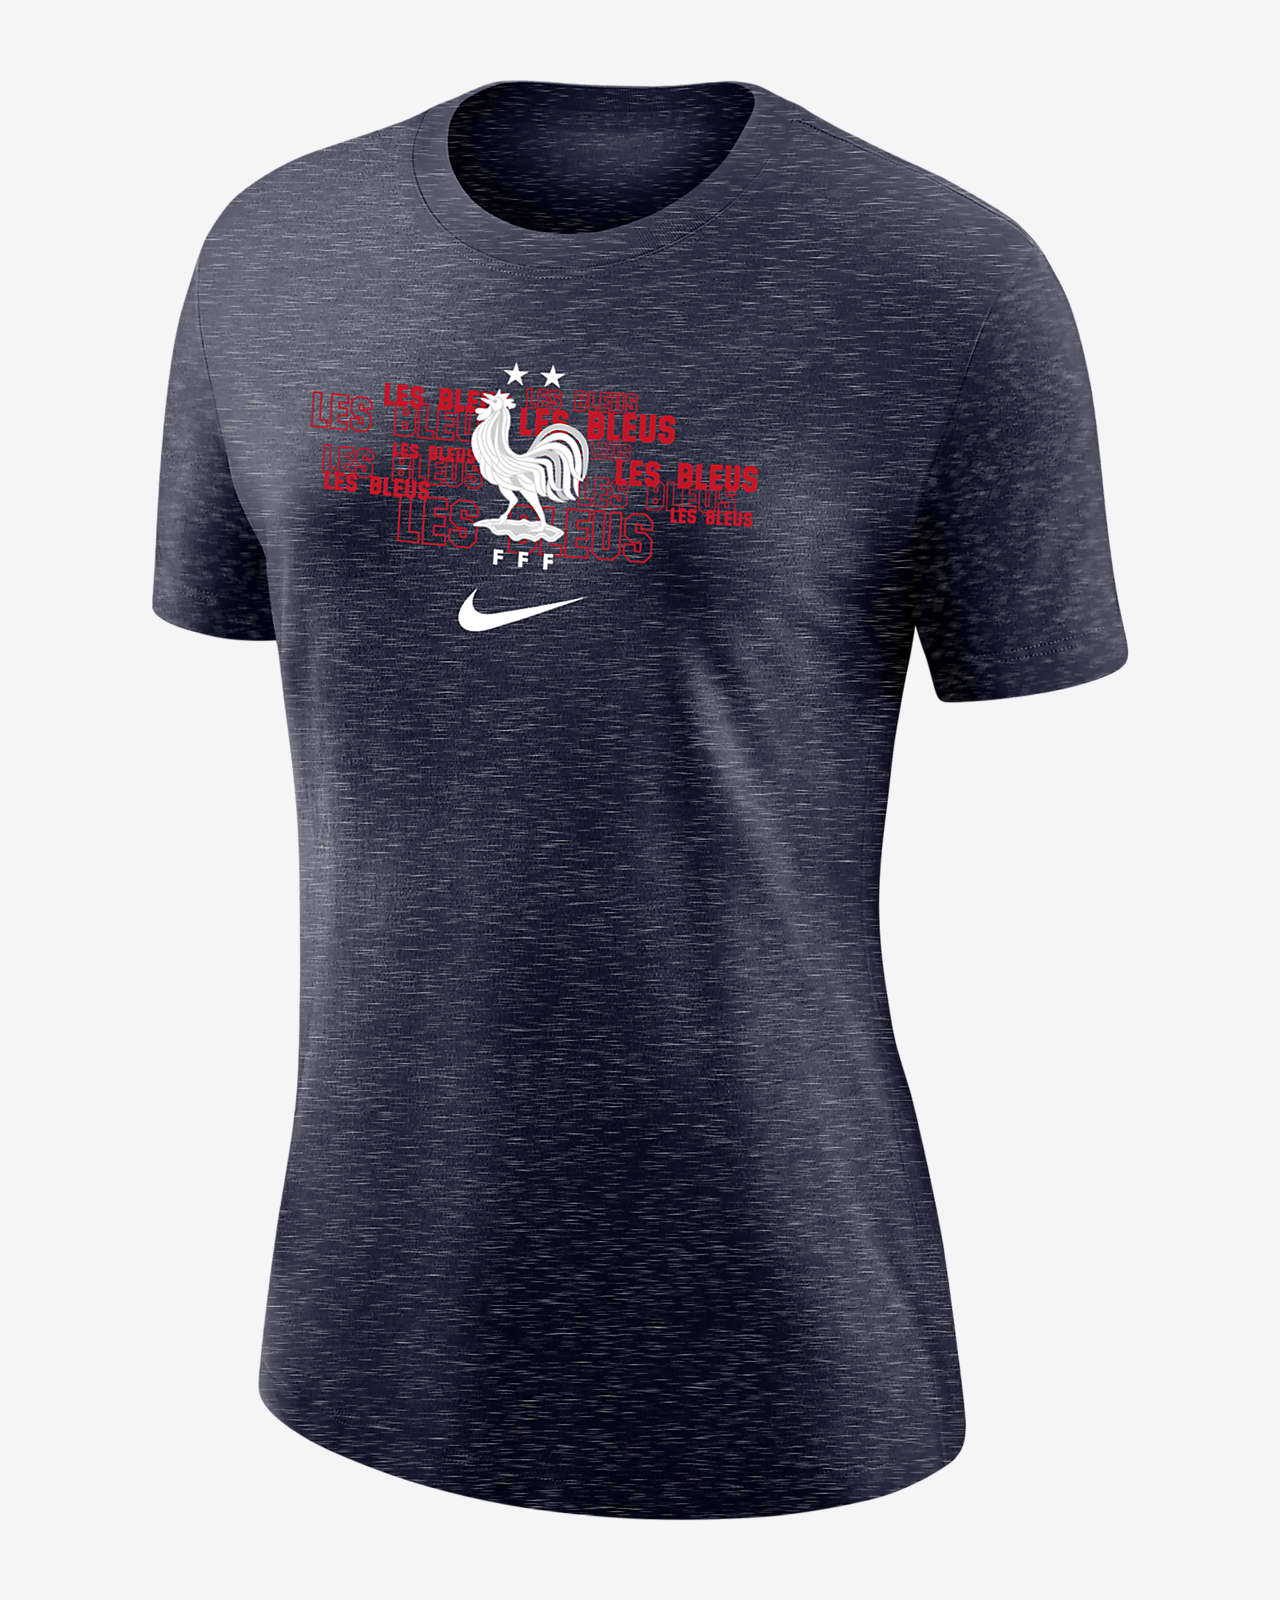 FFF Women's Varsity T-Shirt. Nike.com